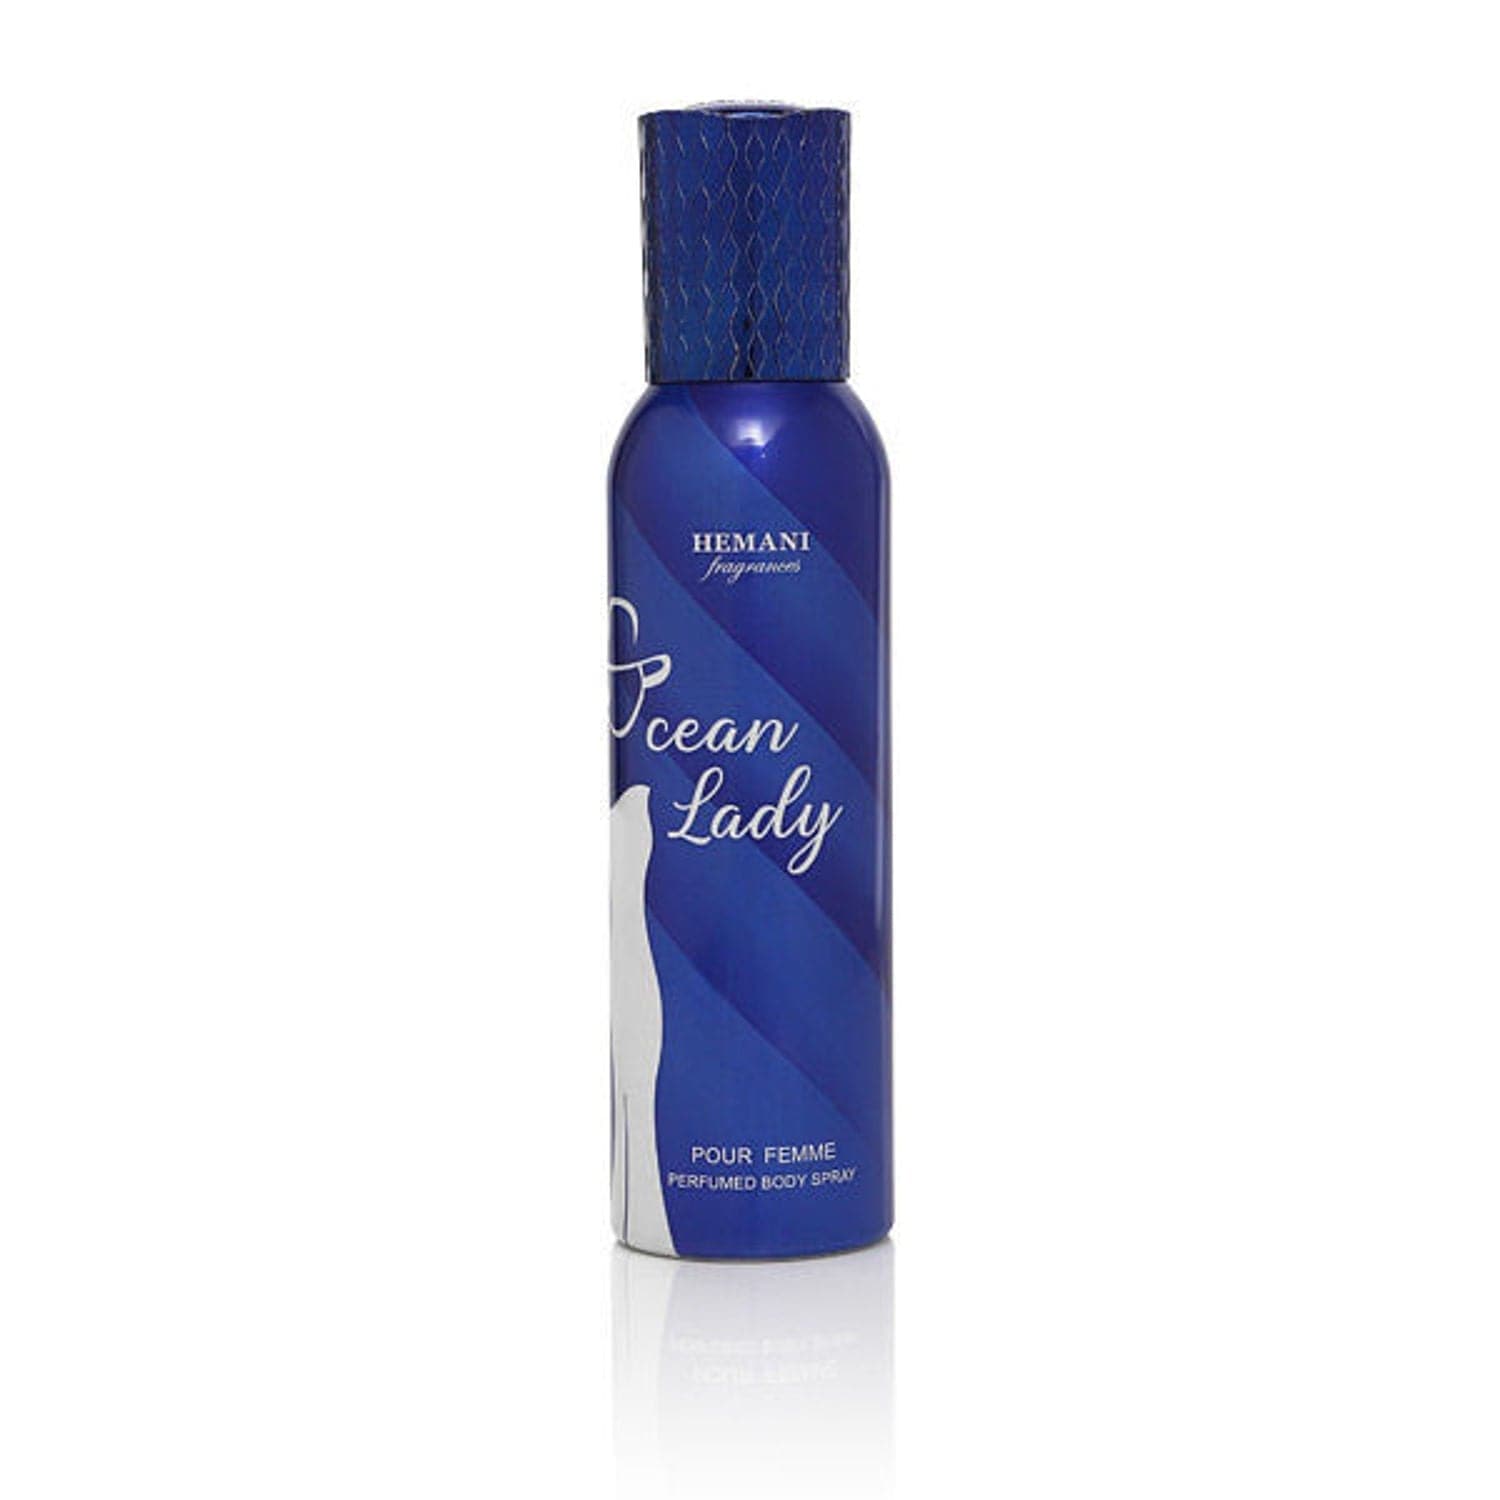 Hemani Ocean Lady Deodorant Body Spray - Women - Premium  from Hemani - Just Rs 440.00! Shop now at Cozmetica